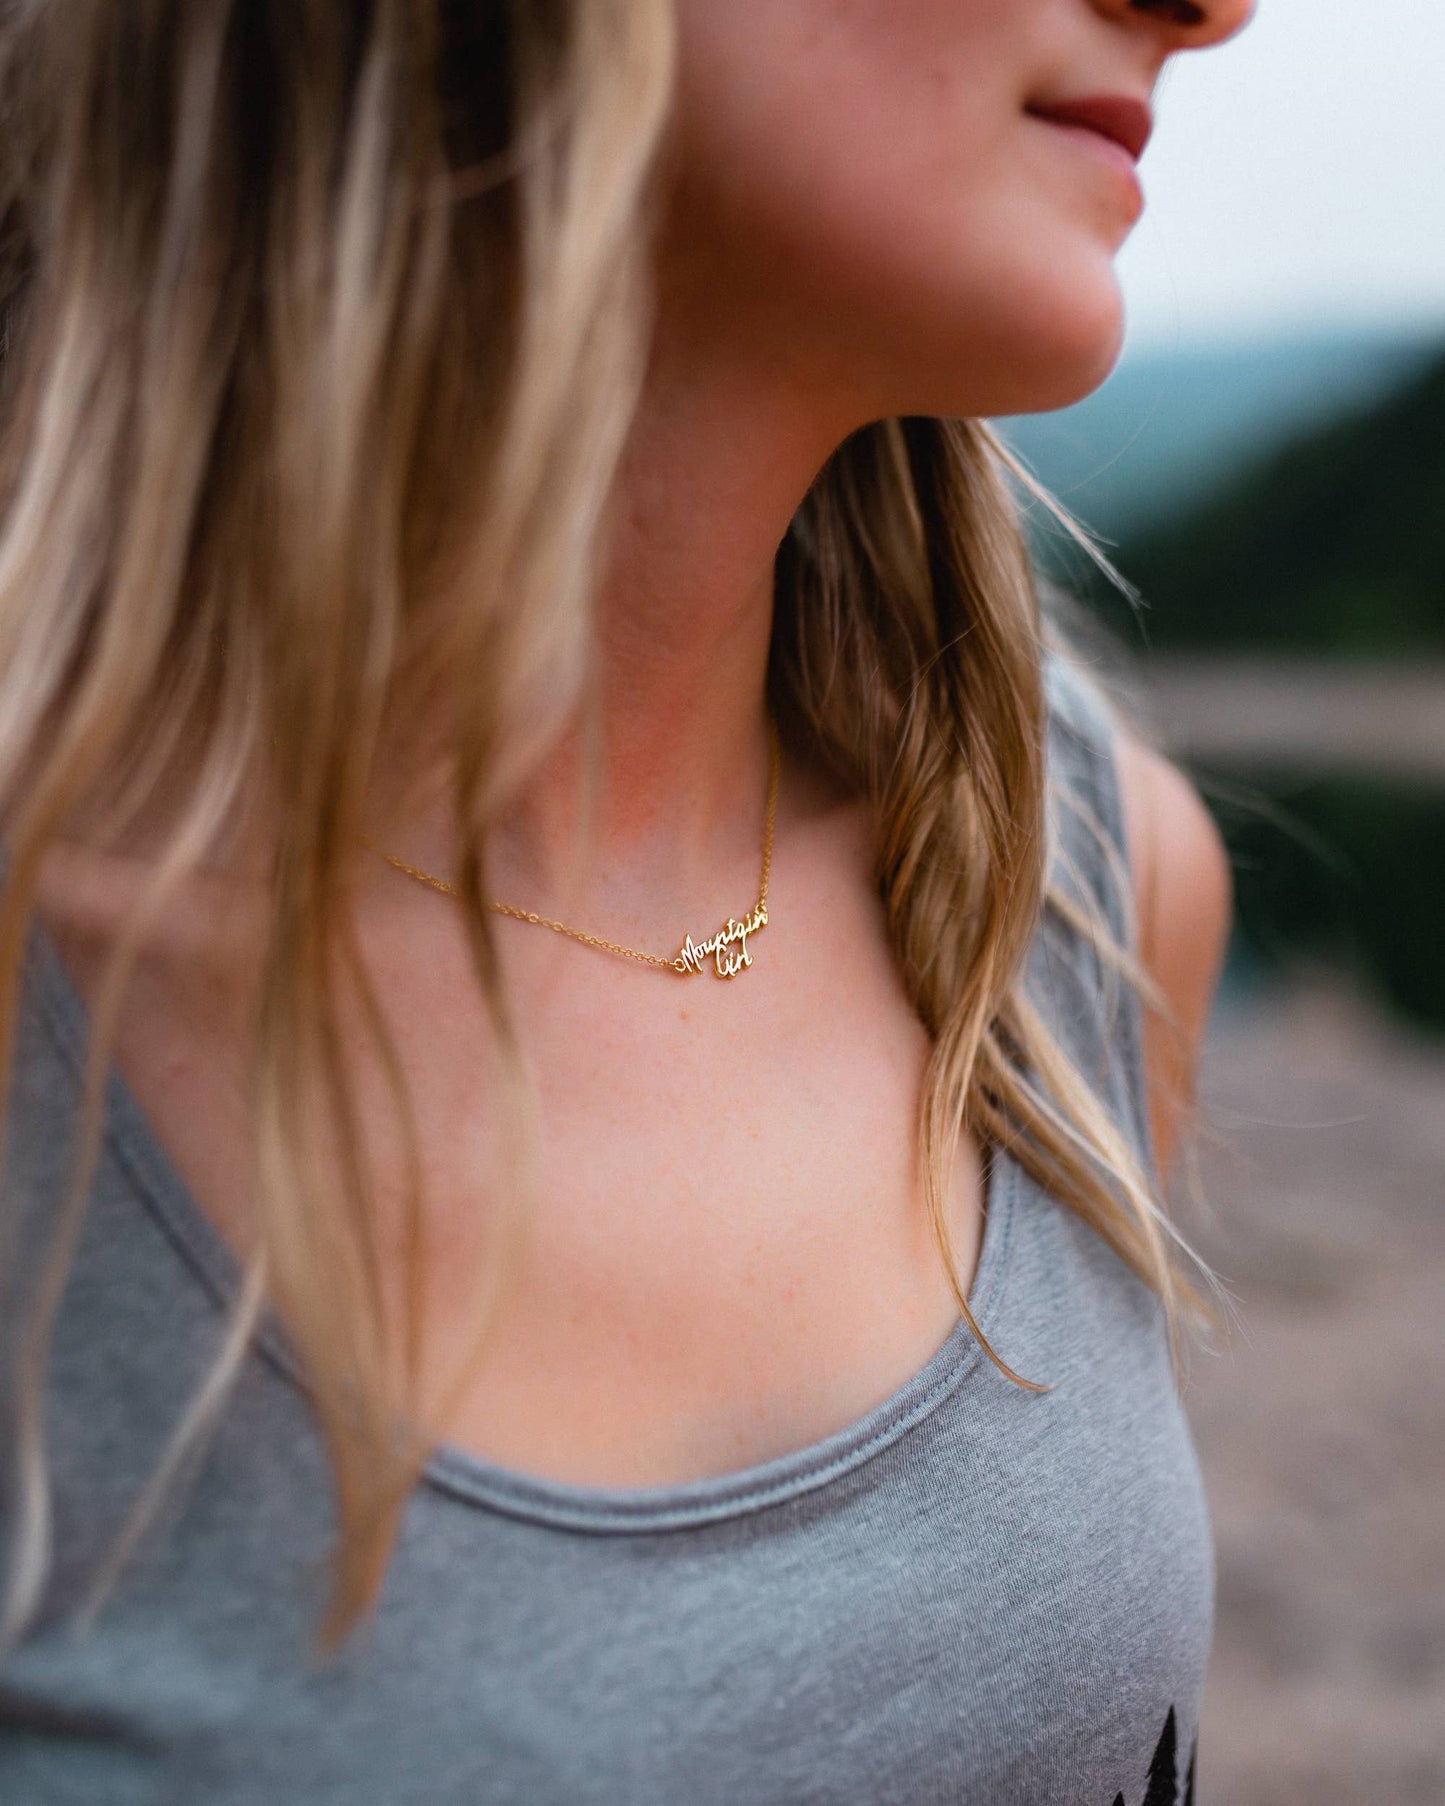 Mountain Girl Necklace- Gold